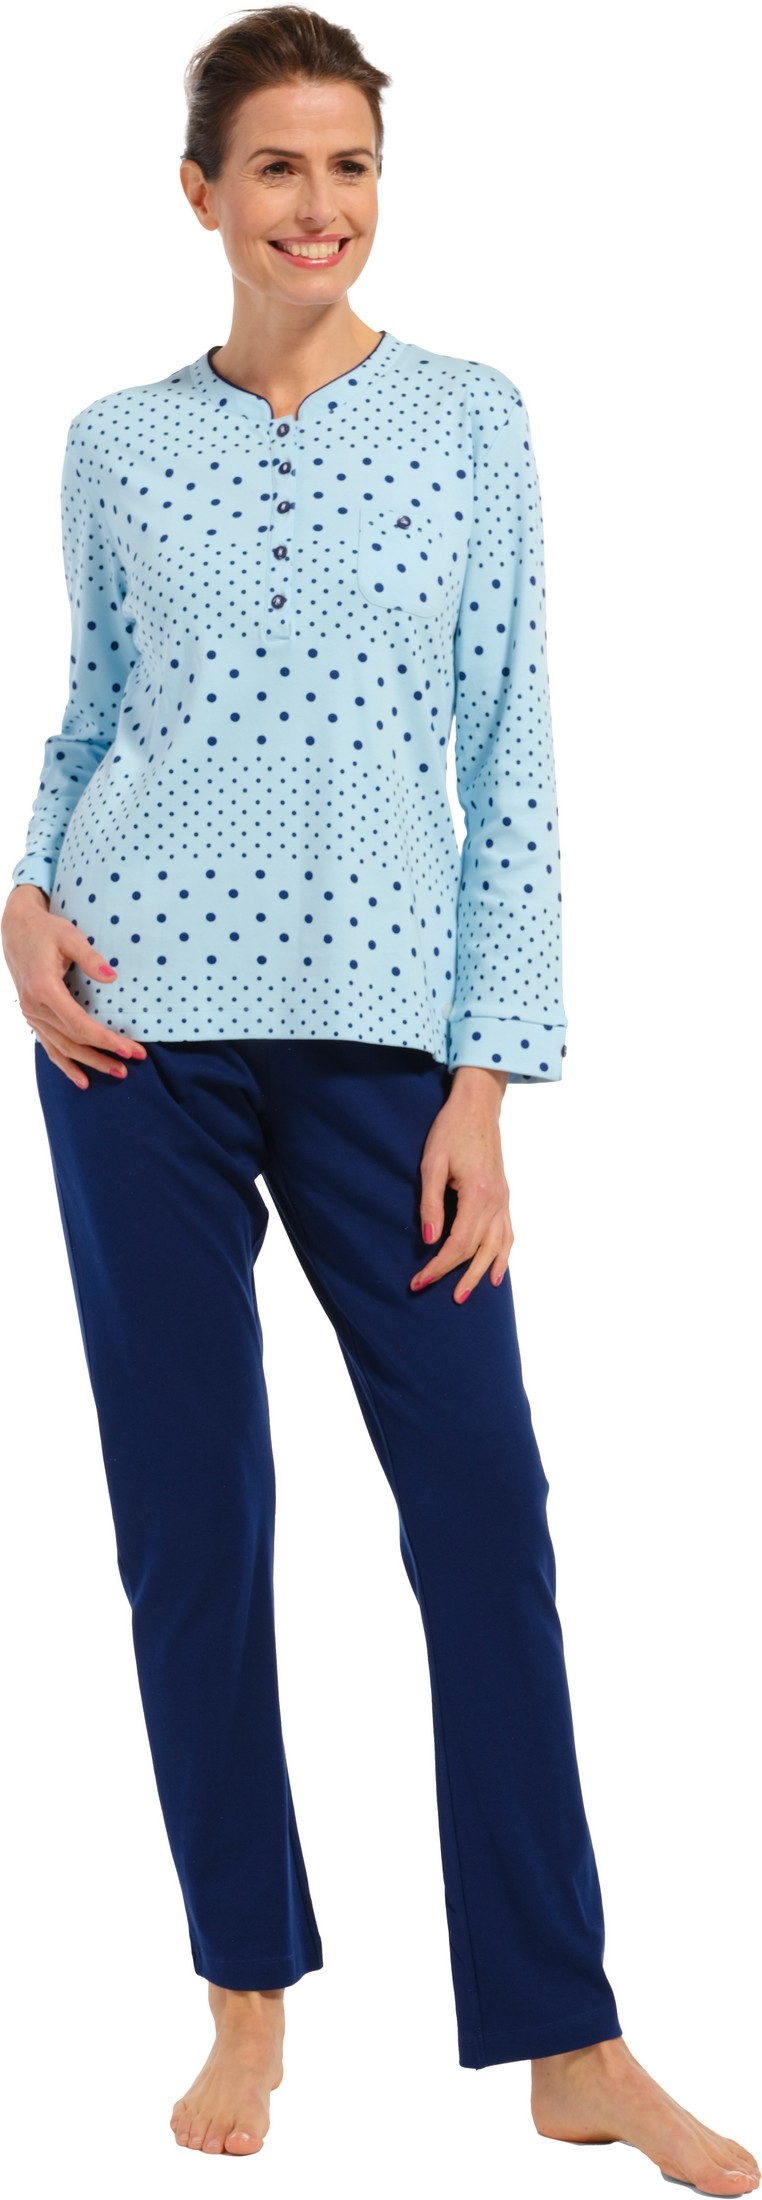 Pastunette dames pyjama 20232-162-4 - Blauw - 36